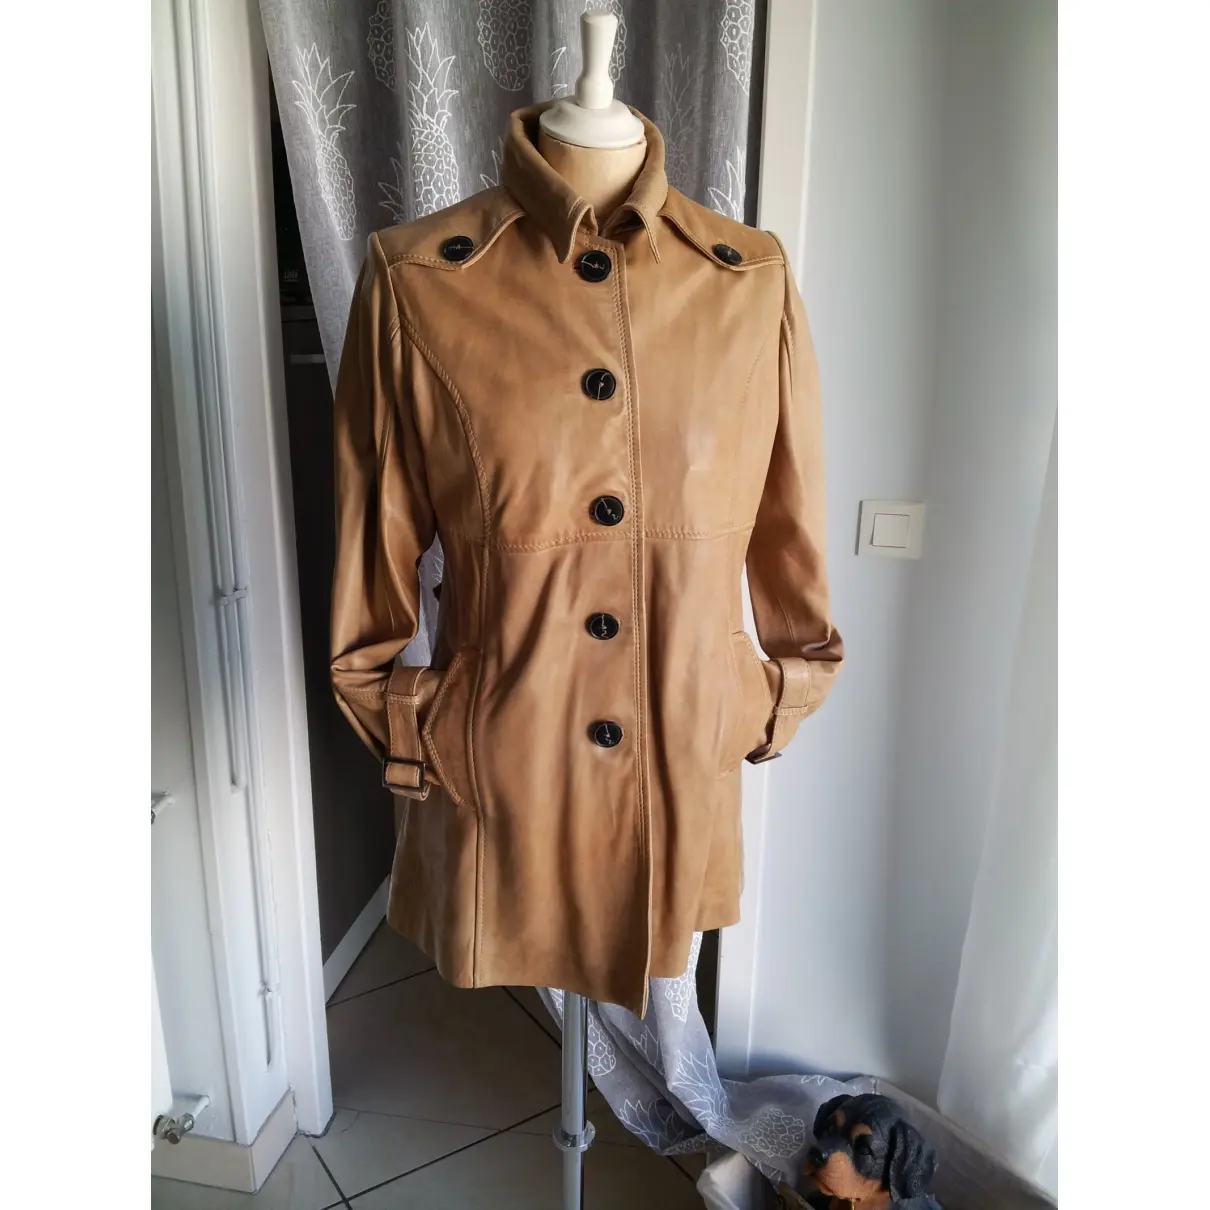 Oakwood Leather coat for sale